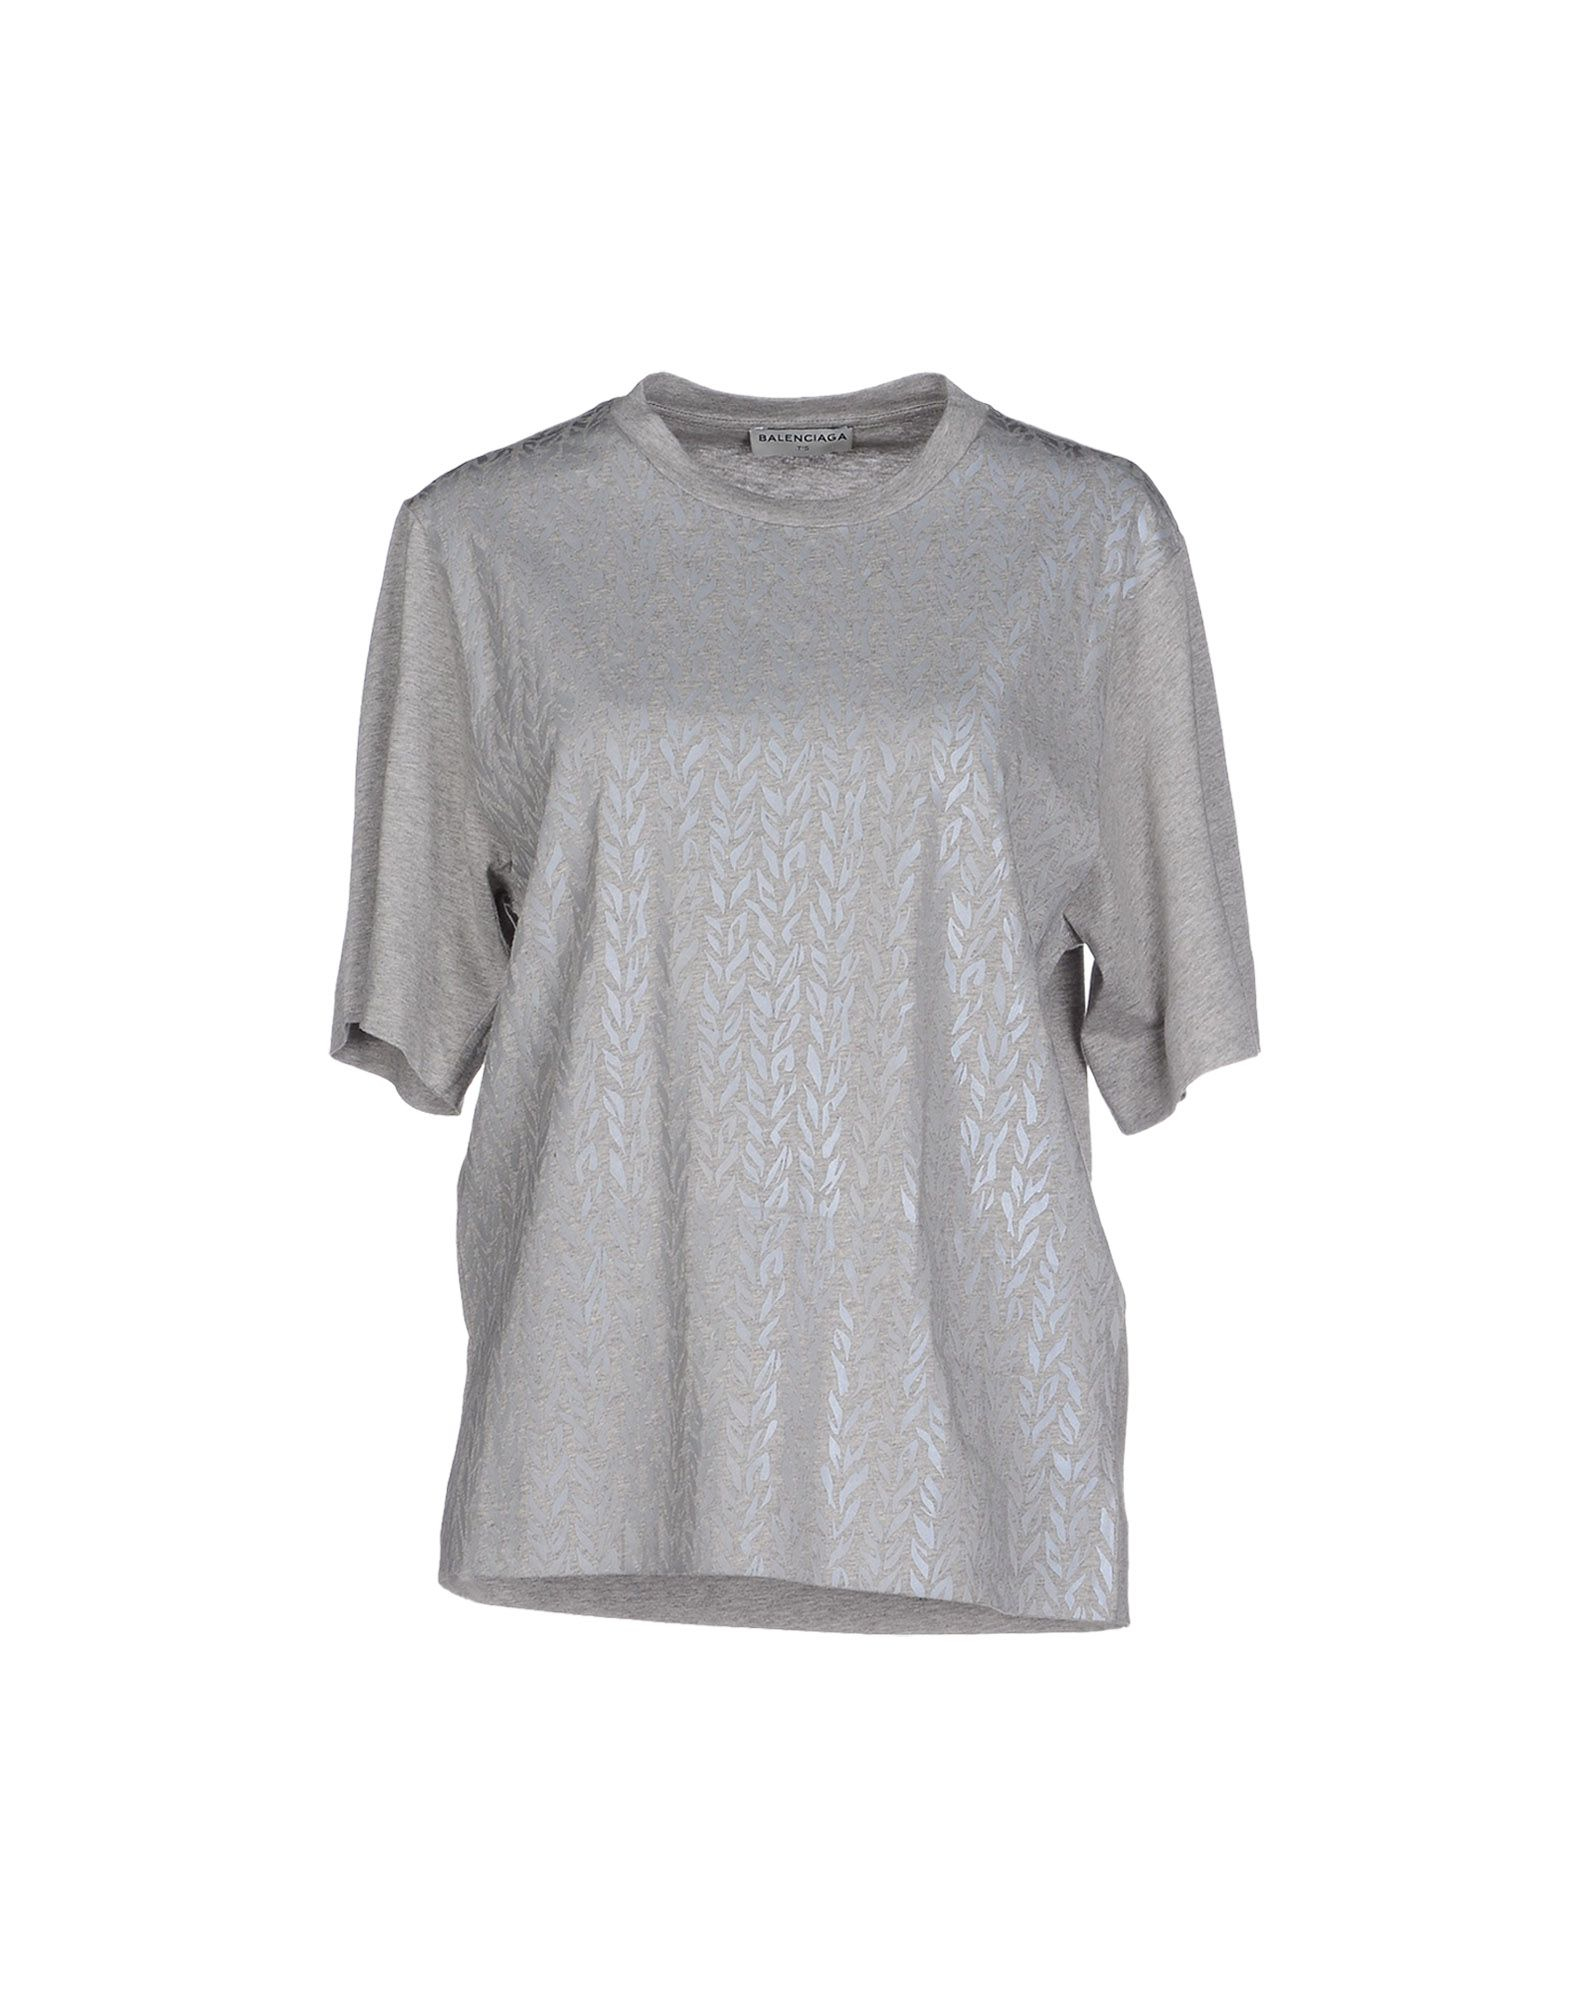 Balenciaga T-shirt in Gray | Lyst